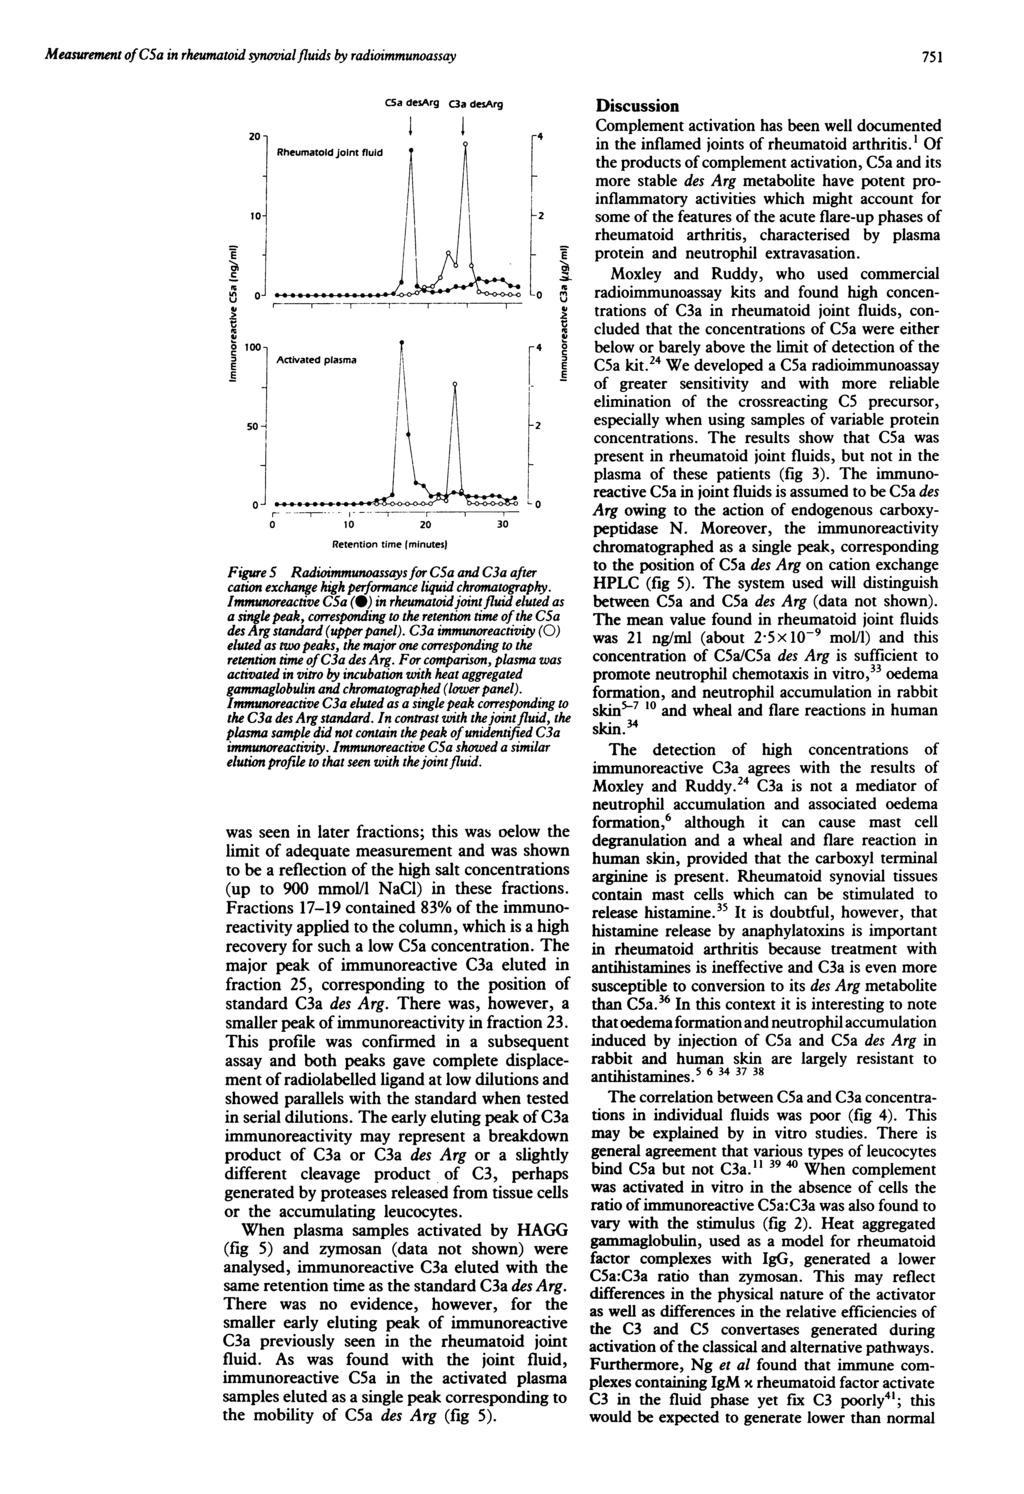 Measurement ofcsa in rheumatoid synovialfluids by radioimmunoassay u Ln 2 1- - 1 Rheumatold joint fluid Ativated plasma CSa desarg -- I- I C3a desarg 1 2 3 Retention time (minutes) Figure S